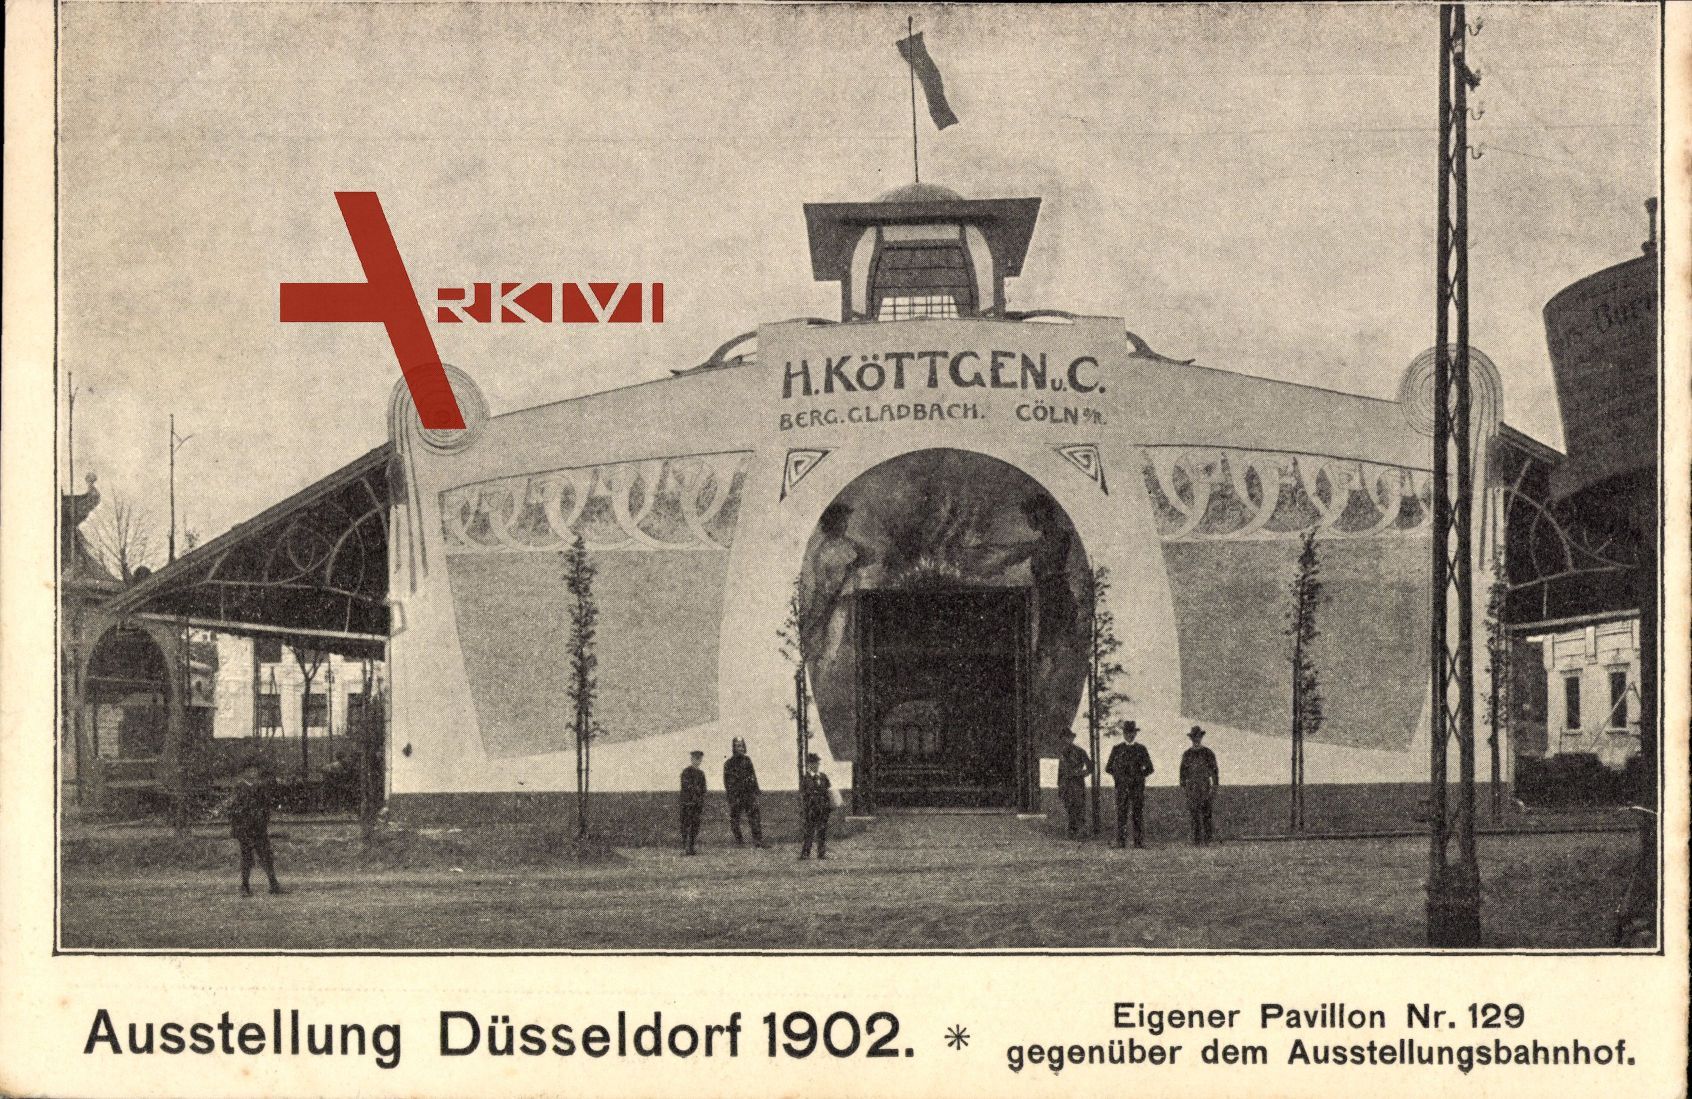 Düsseldorf, Ausstellung 1902, Pavillon H. Köttgen u. C.